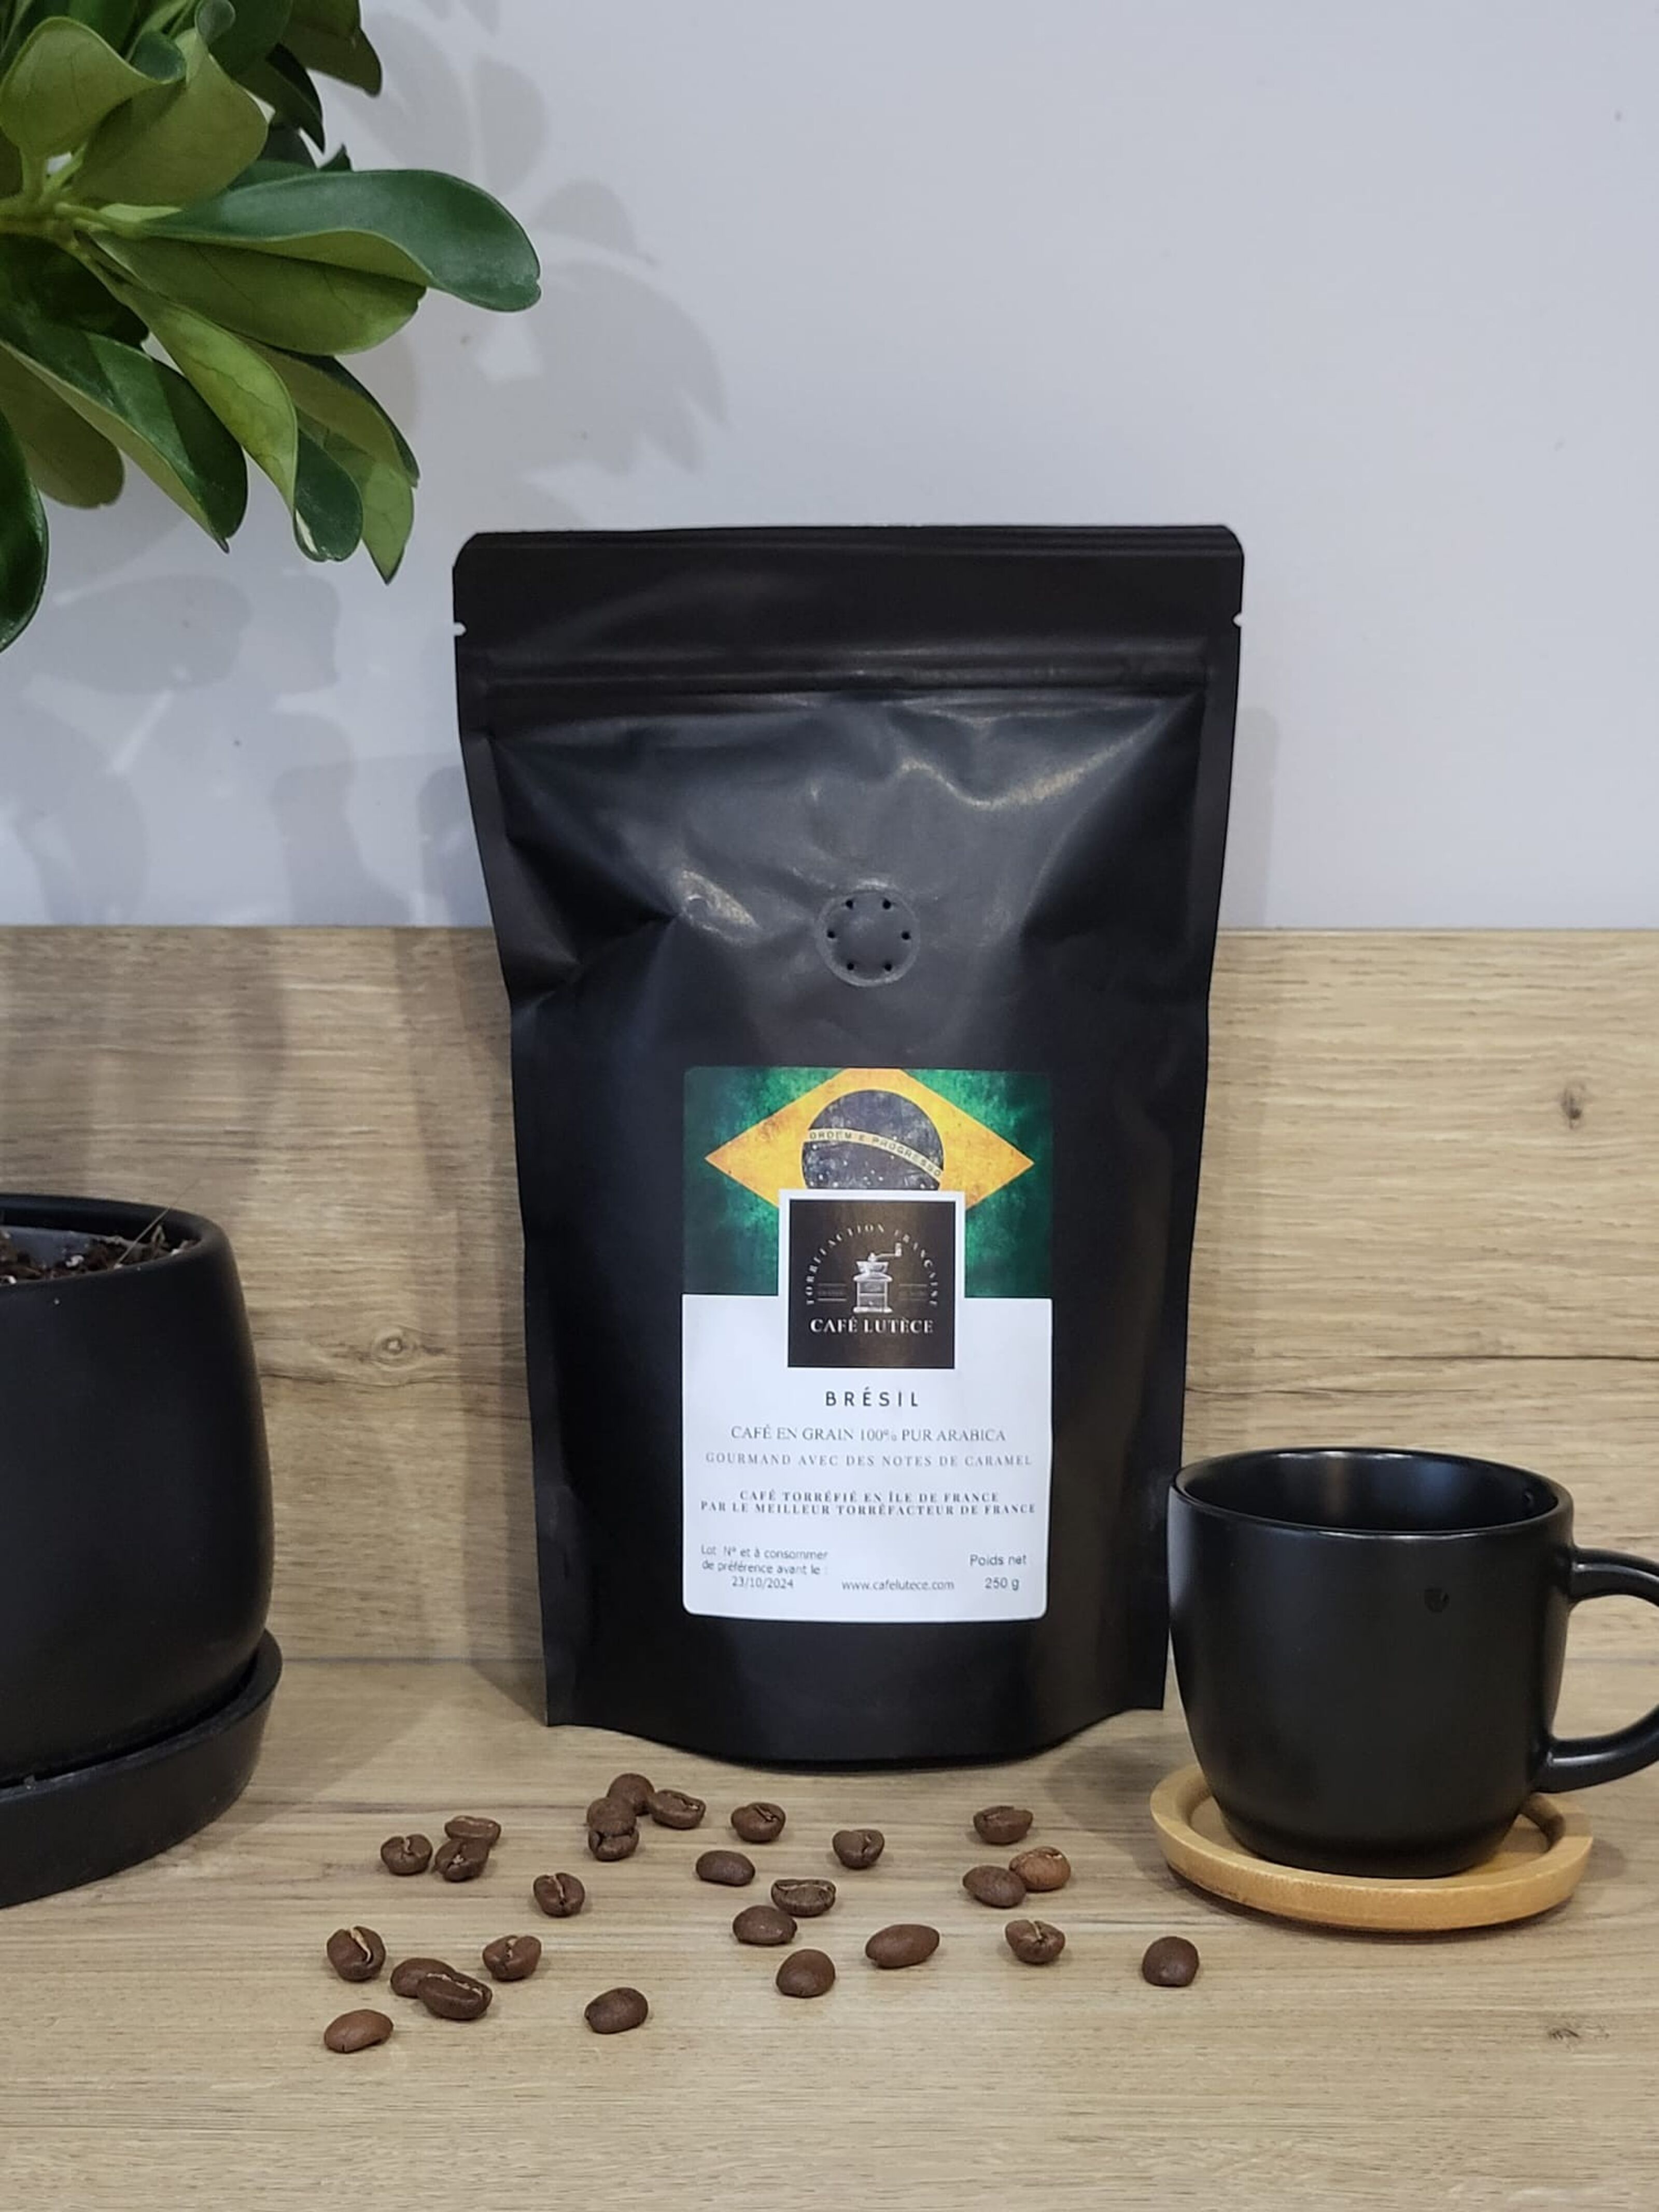 Starbucks® Espresso Roast Dark Roast Café en grains torréfié (200g